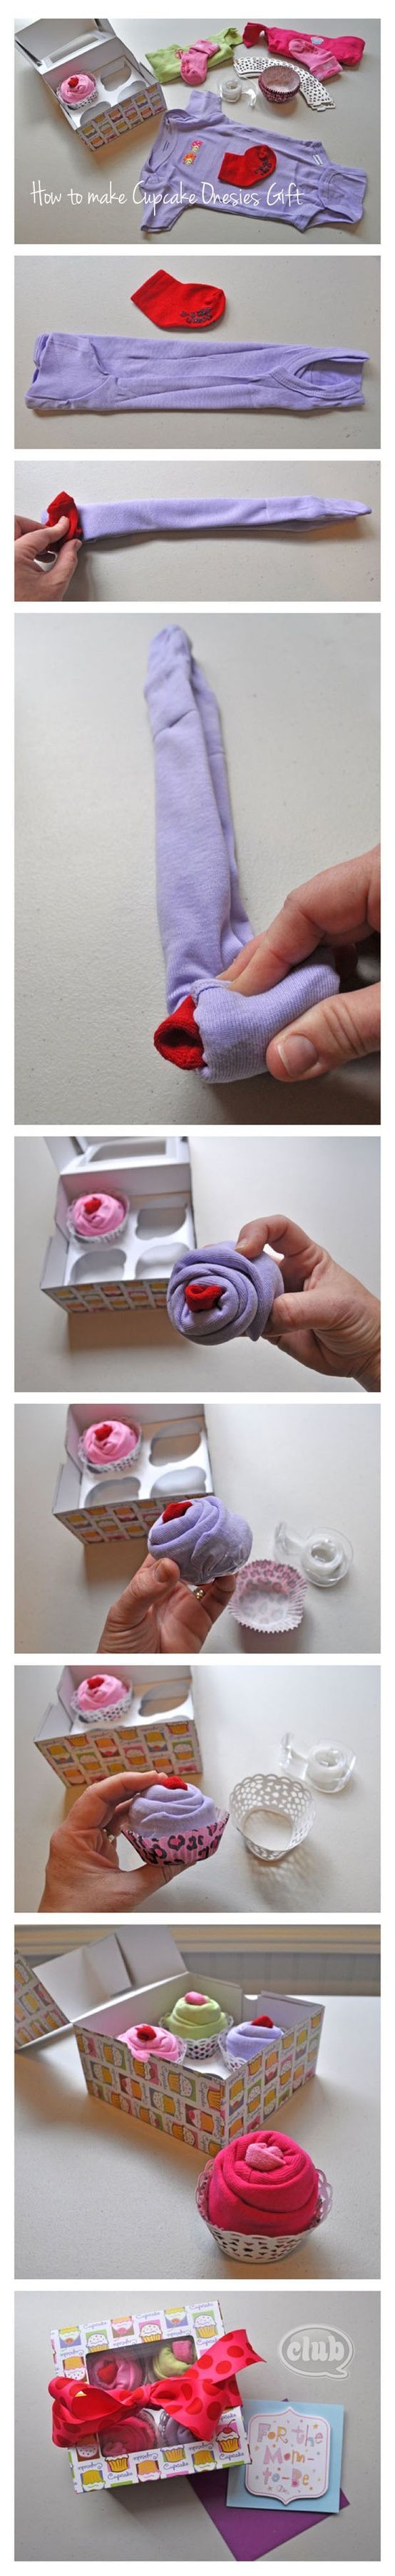 Cupcake onesies baby gift – perfect homemade gift idea. so cute!